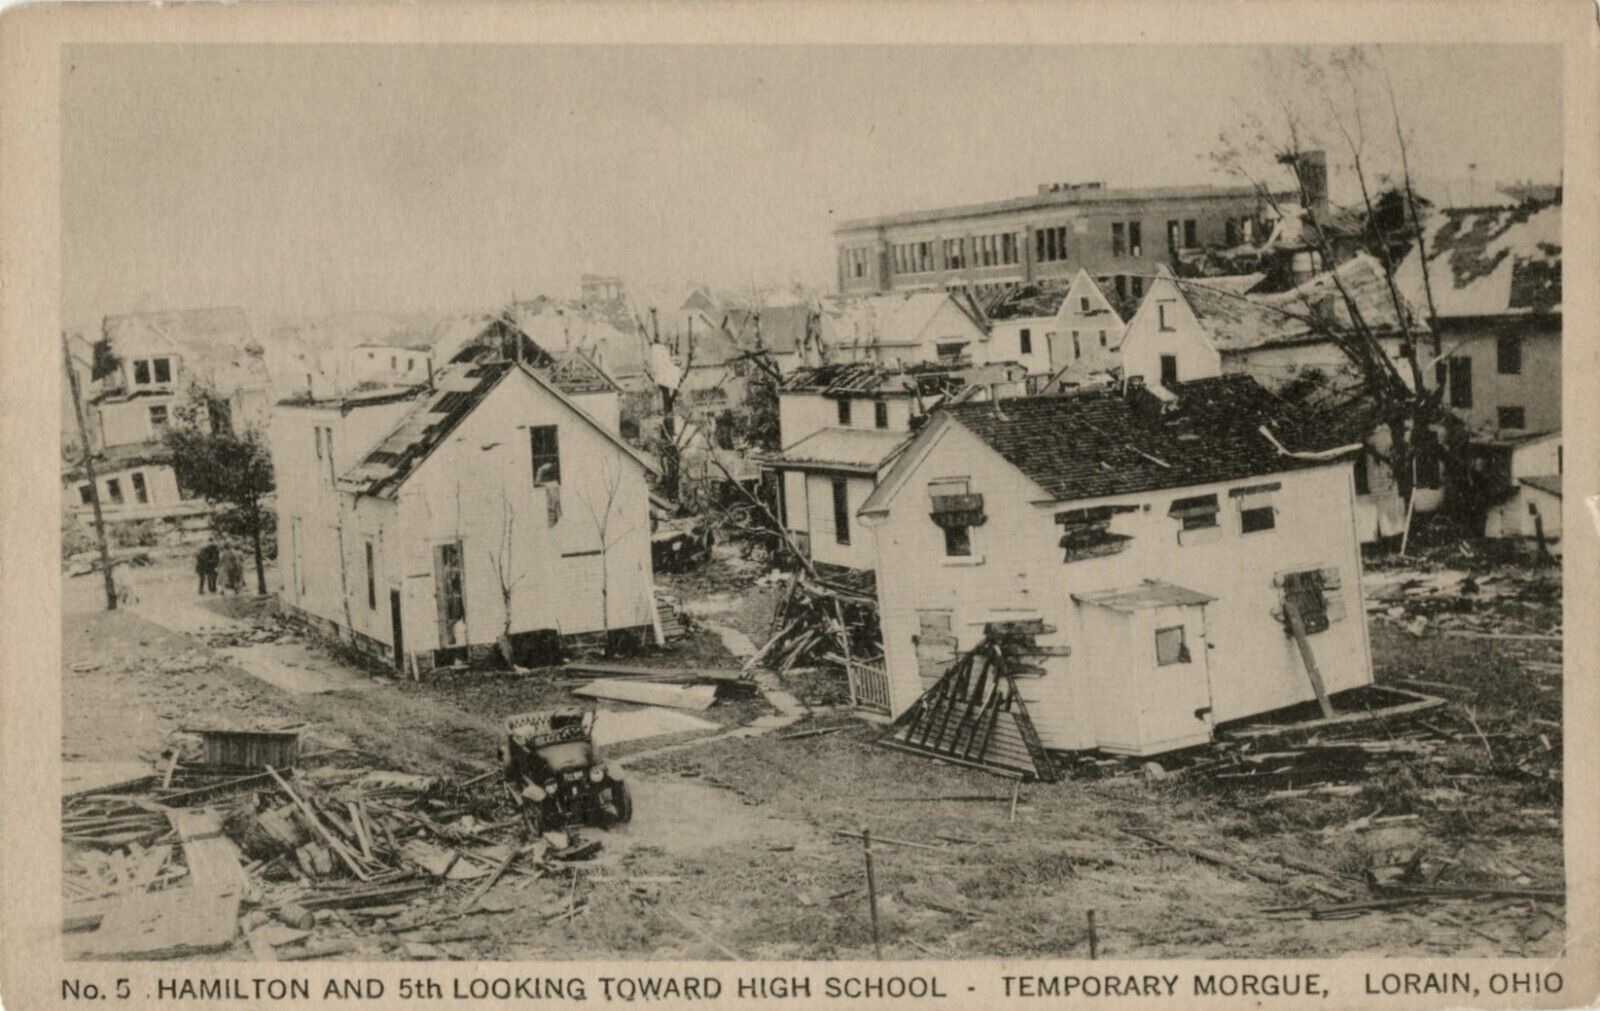 POSTCARD - 1924 LORAIN, OHIO TORNADO - HAMILTON & 5TH LOOKING TOWARD HIGH SCHOOL